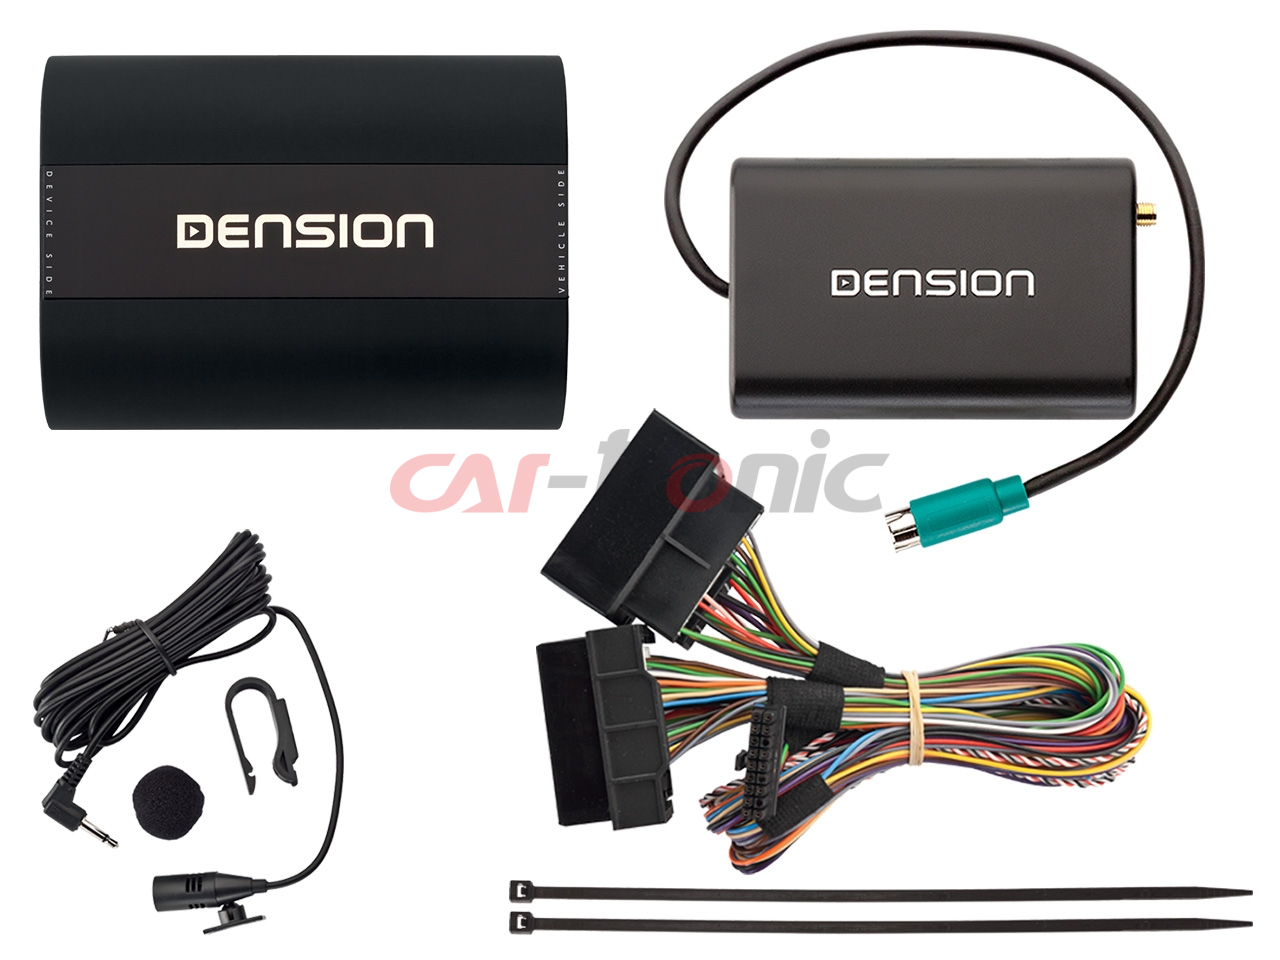 Dension Pro BT, Bluetooth, USB, DAB - Citroen, Peugeot